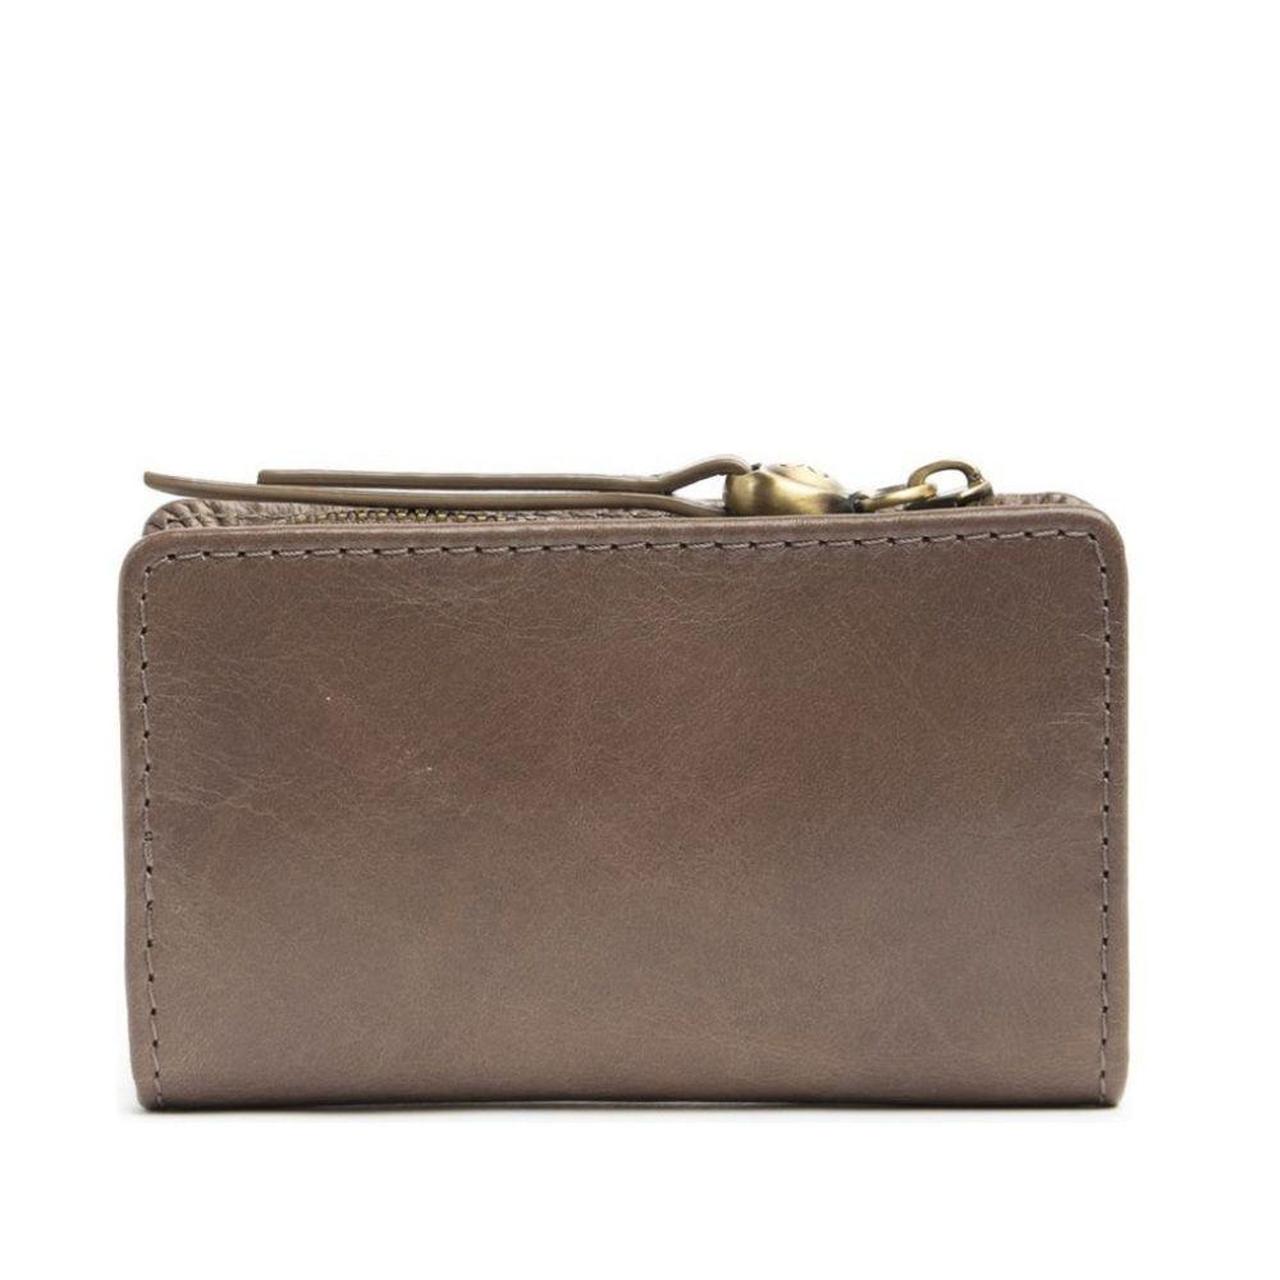 Product Image 3 - Hobo Dart Calfskin Leather Wallet
Color: